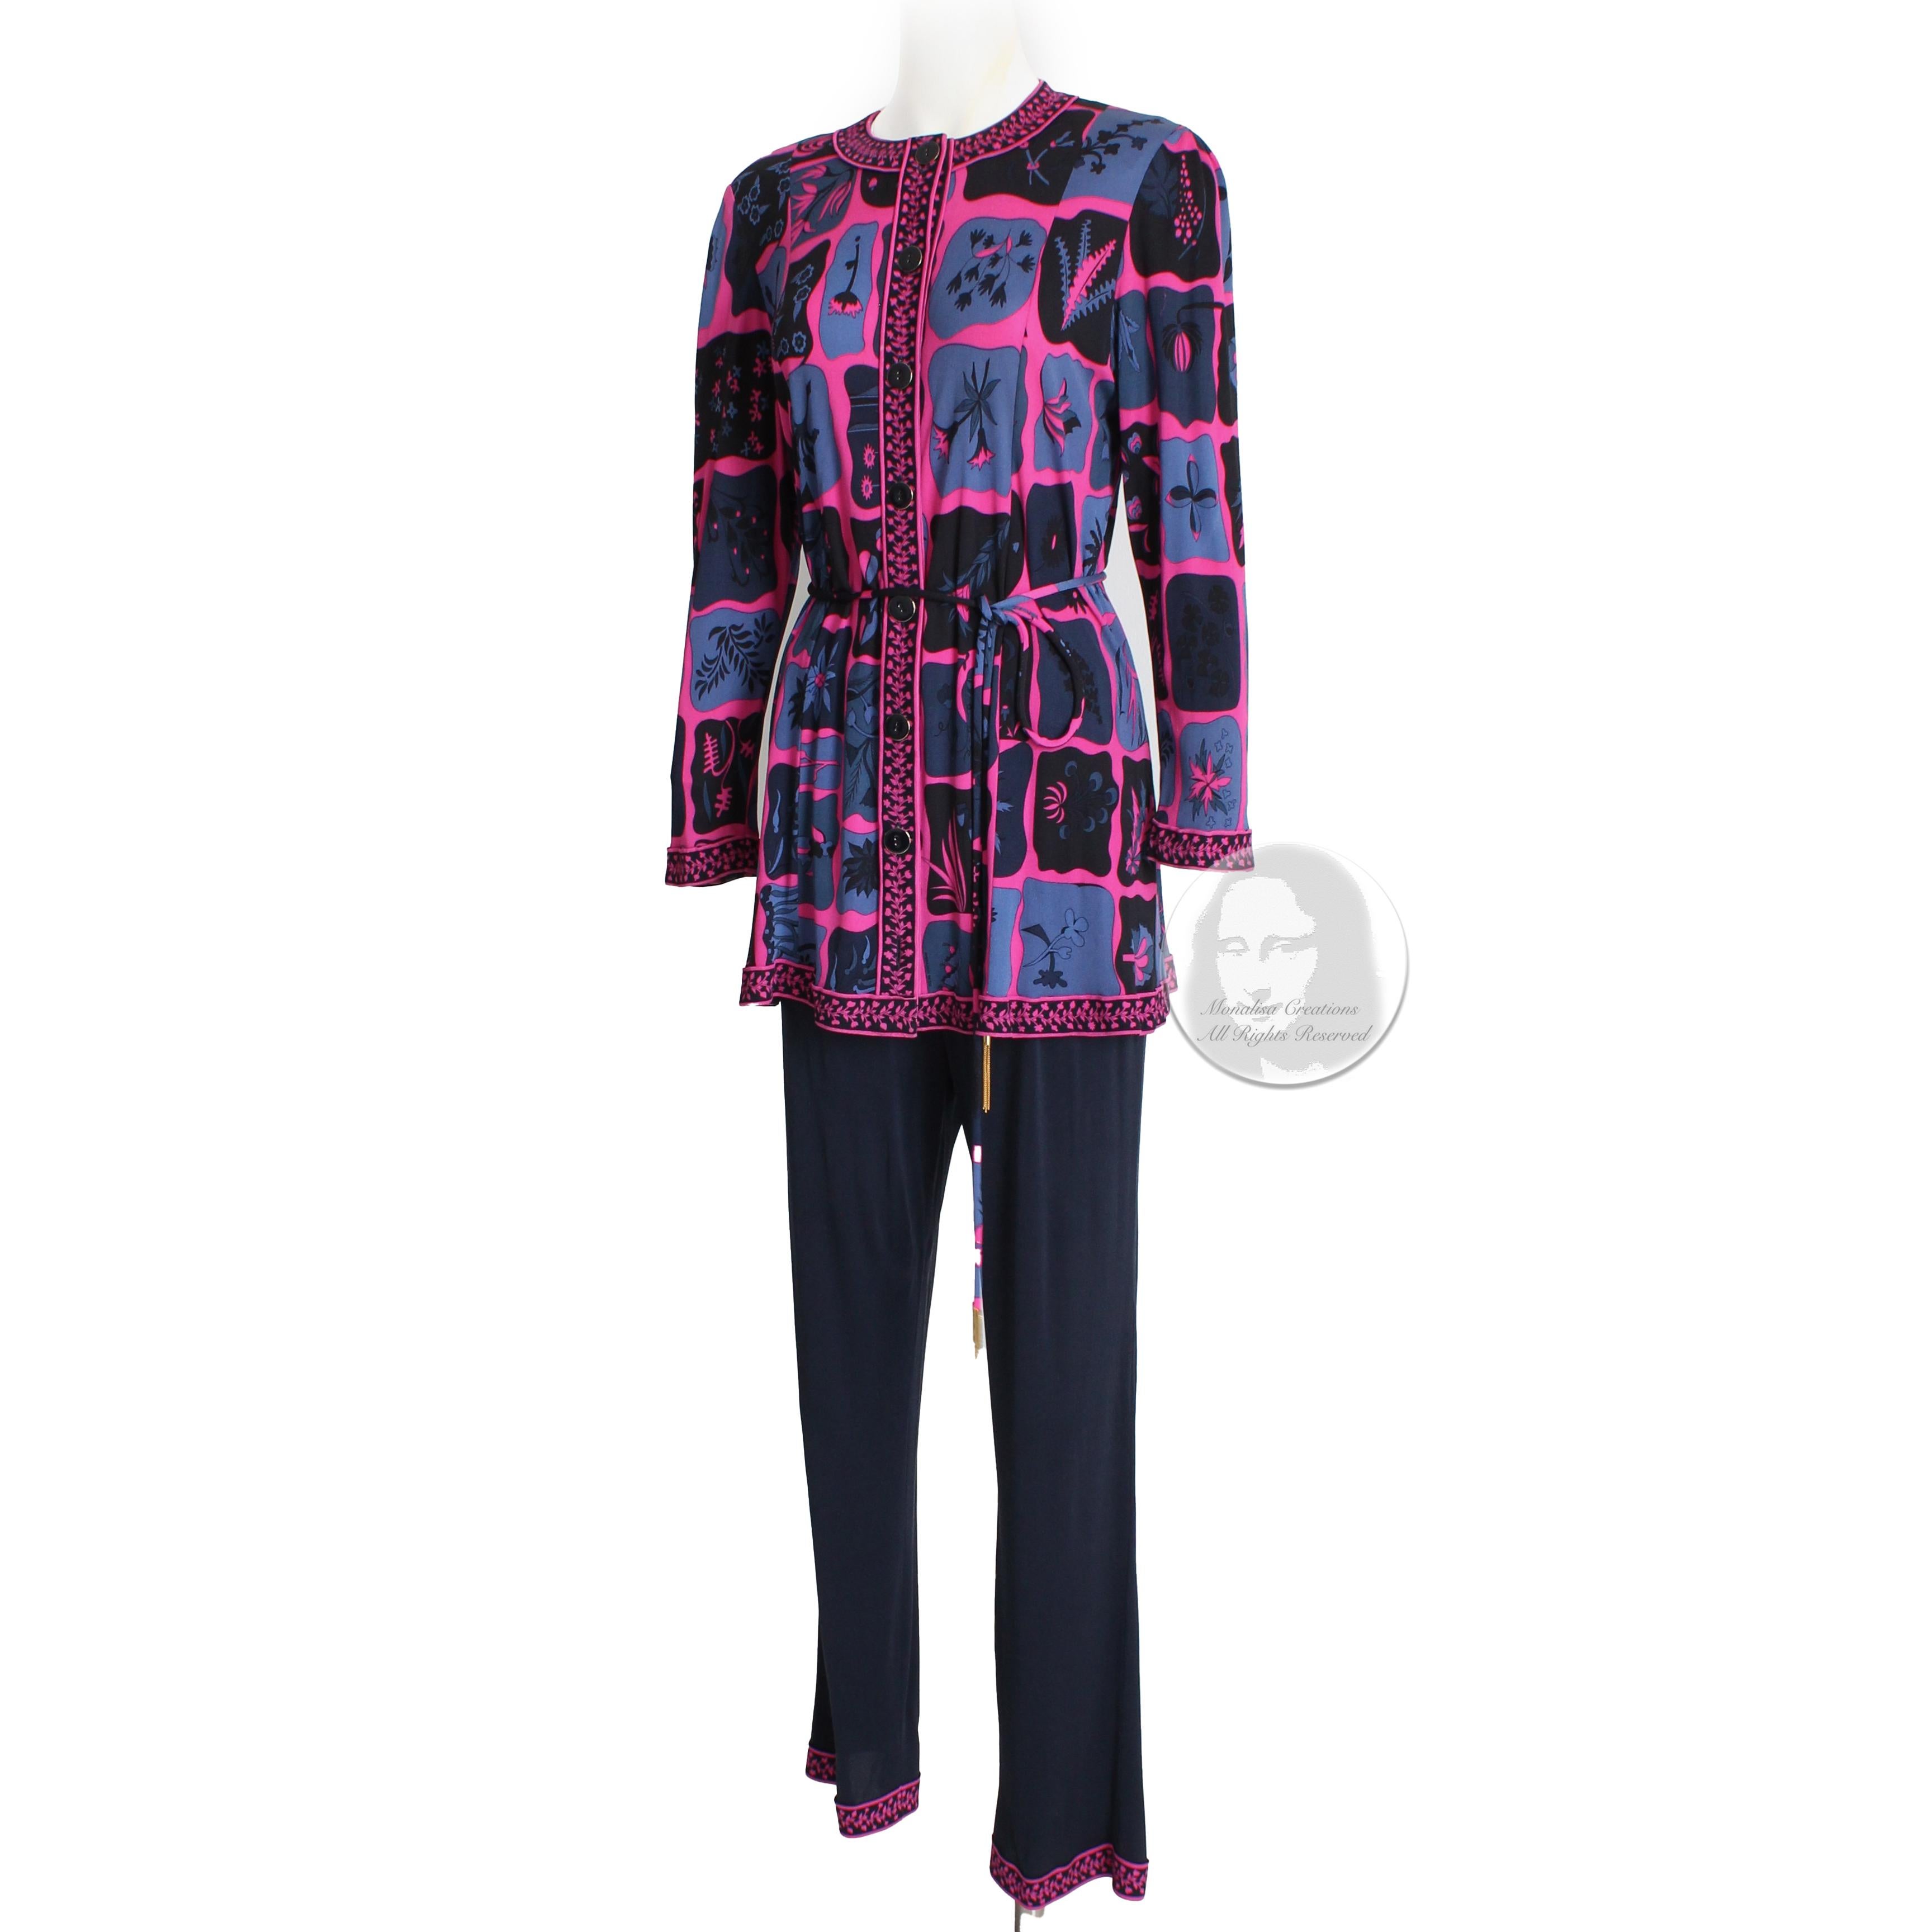 Averardo Bessi Suit Top Pants Belt 3pc Silk Jersey Floral Print Size 44 Rare 90s For Sale 1